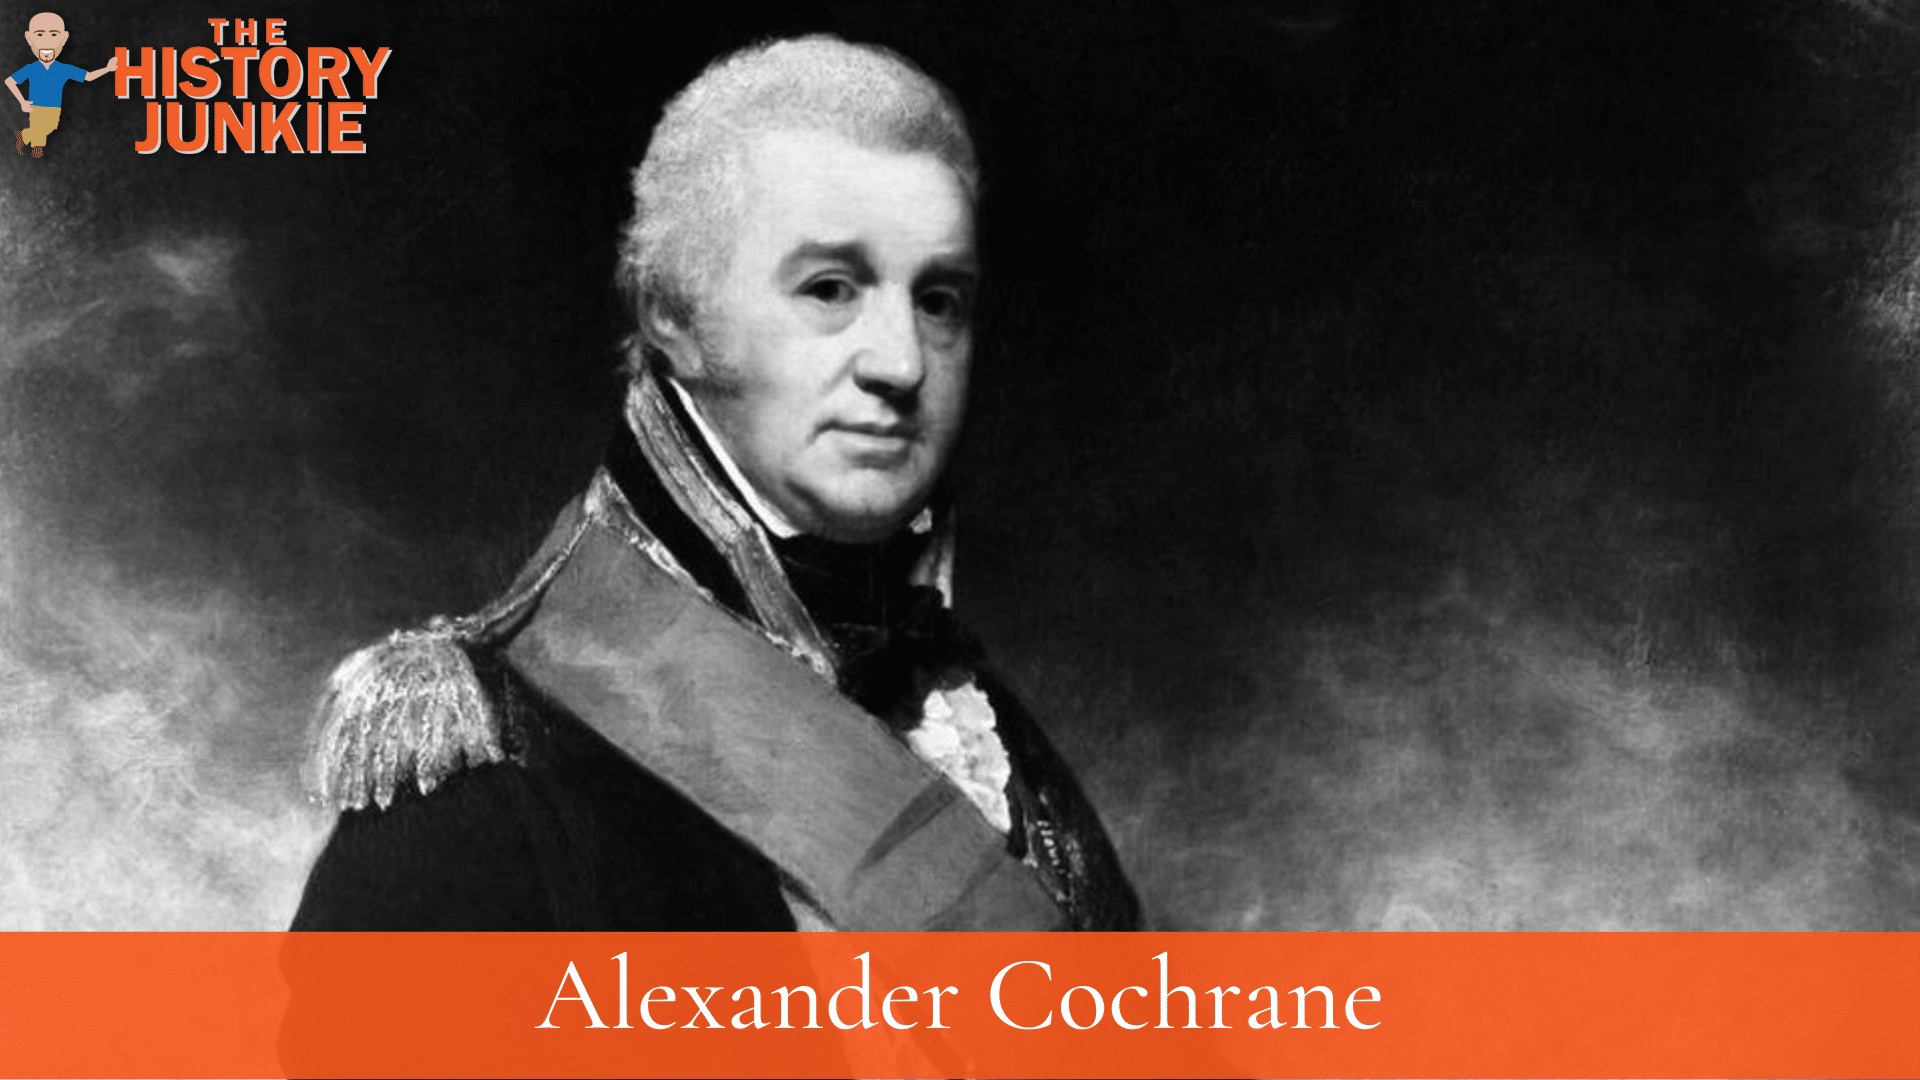 Alexander Cochrane